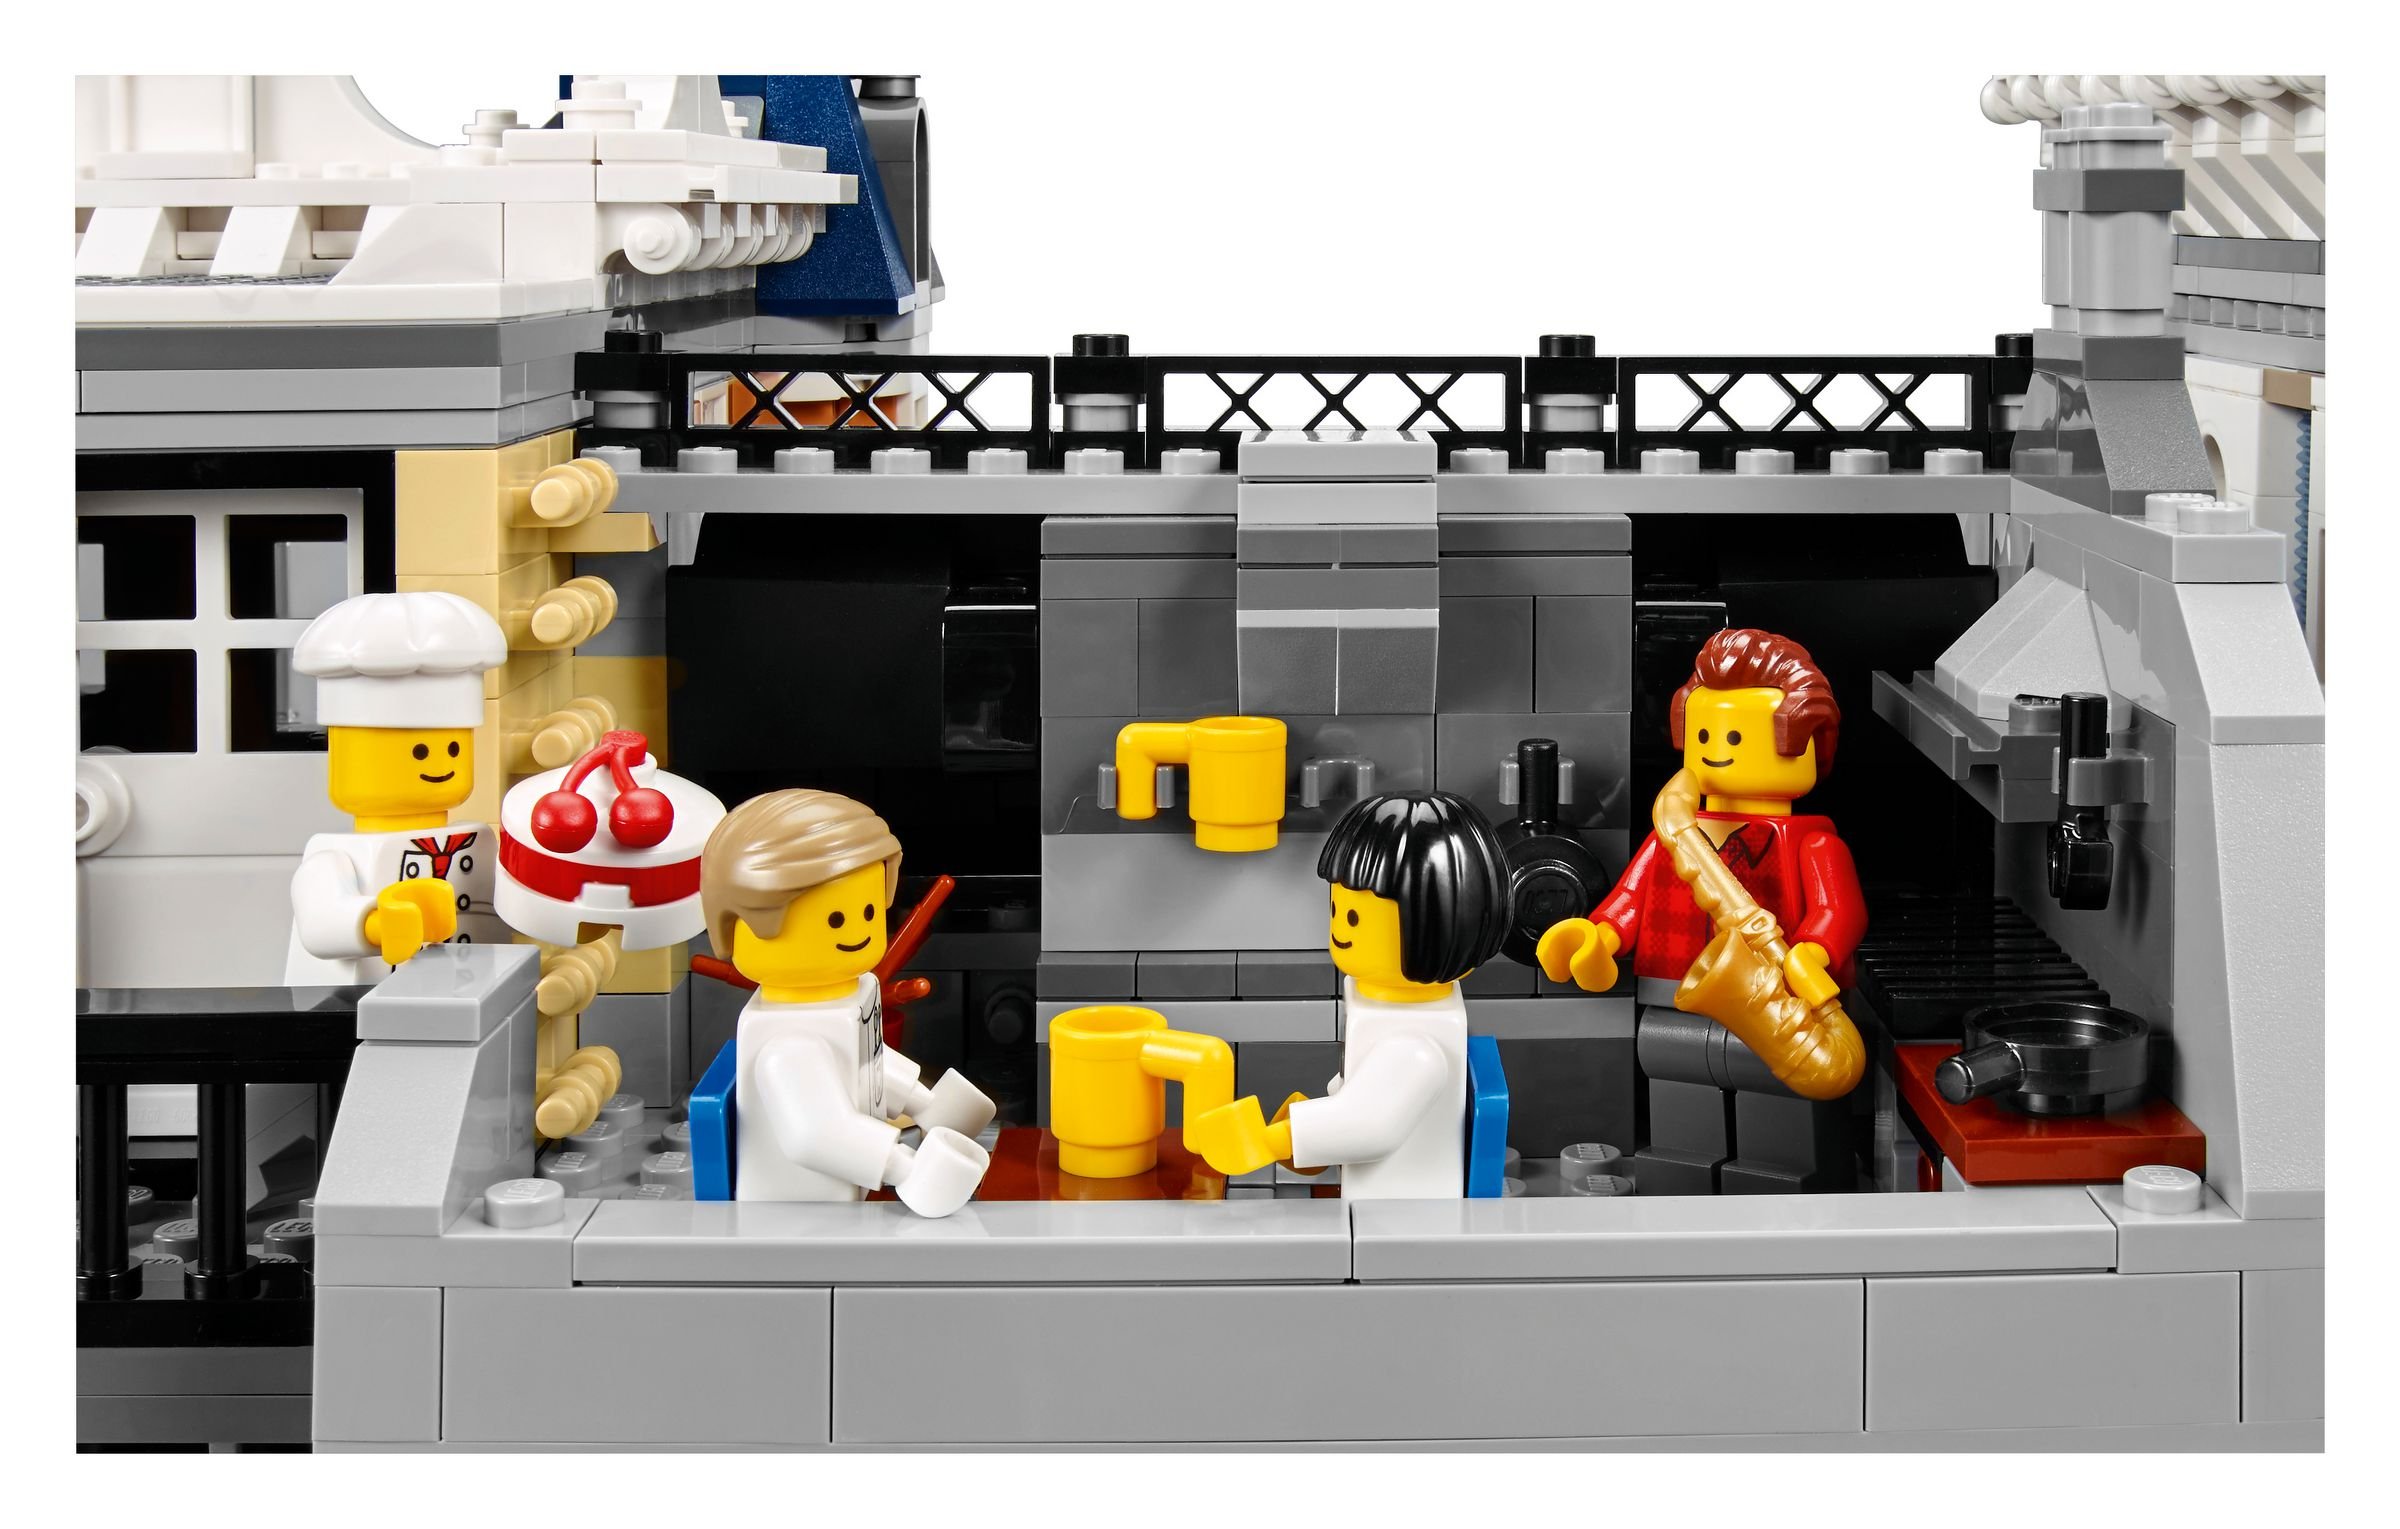 LEGO Advanced Models 10255 Assembly Square / Stadtleben LEGO_10255_alt11.jpg